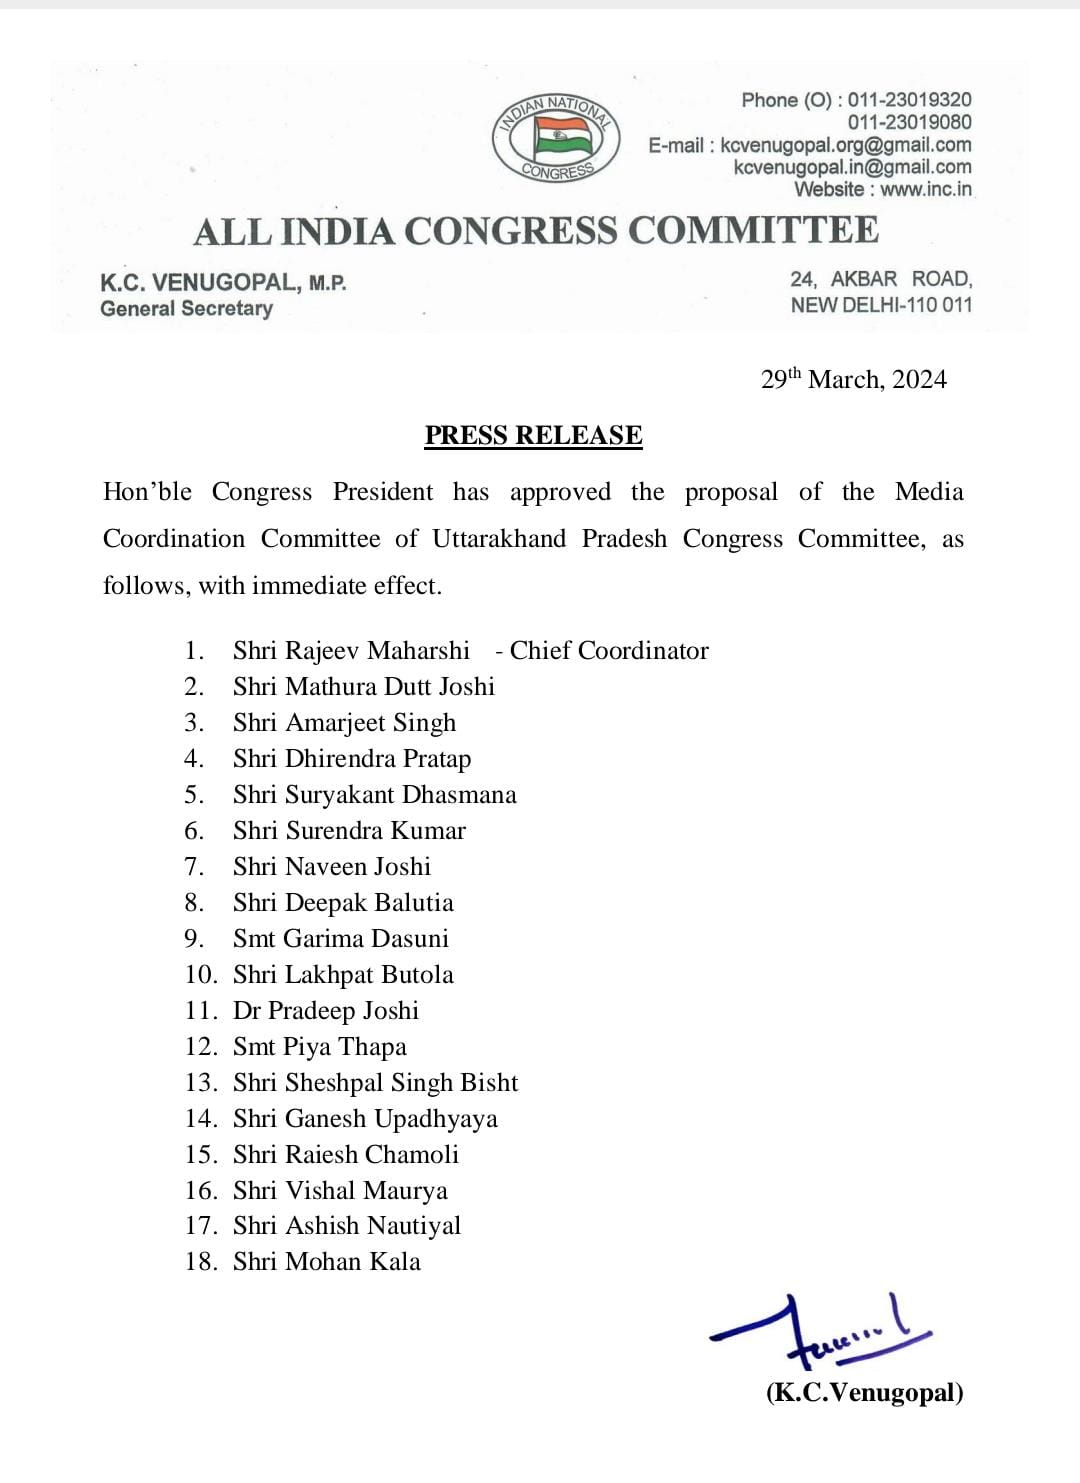 Congress appointed 18 media coordinators in Uttarakhand